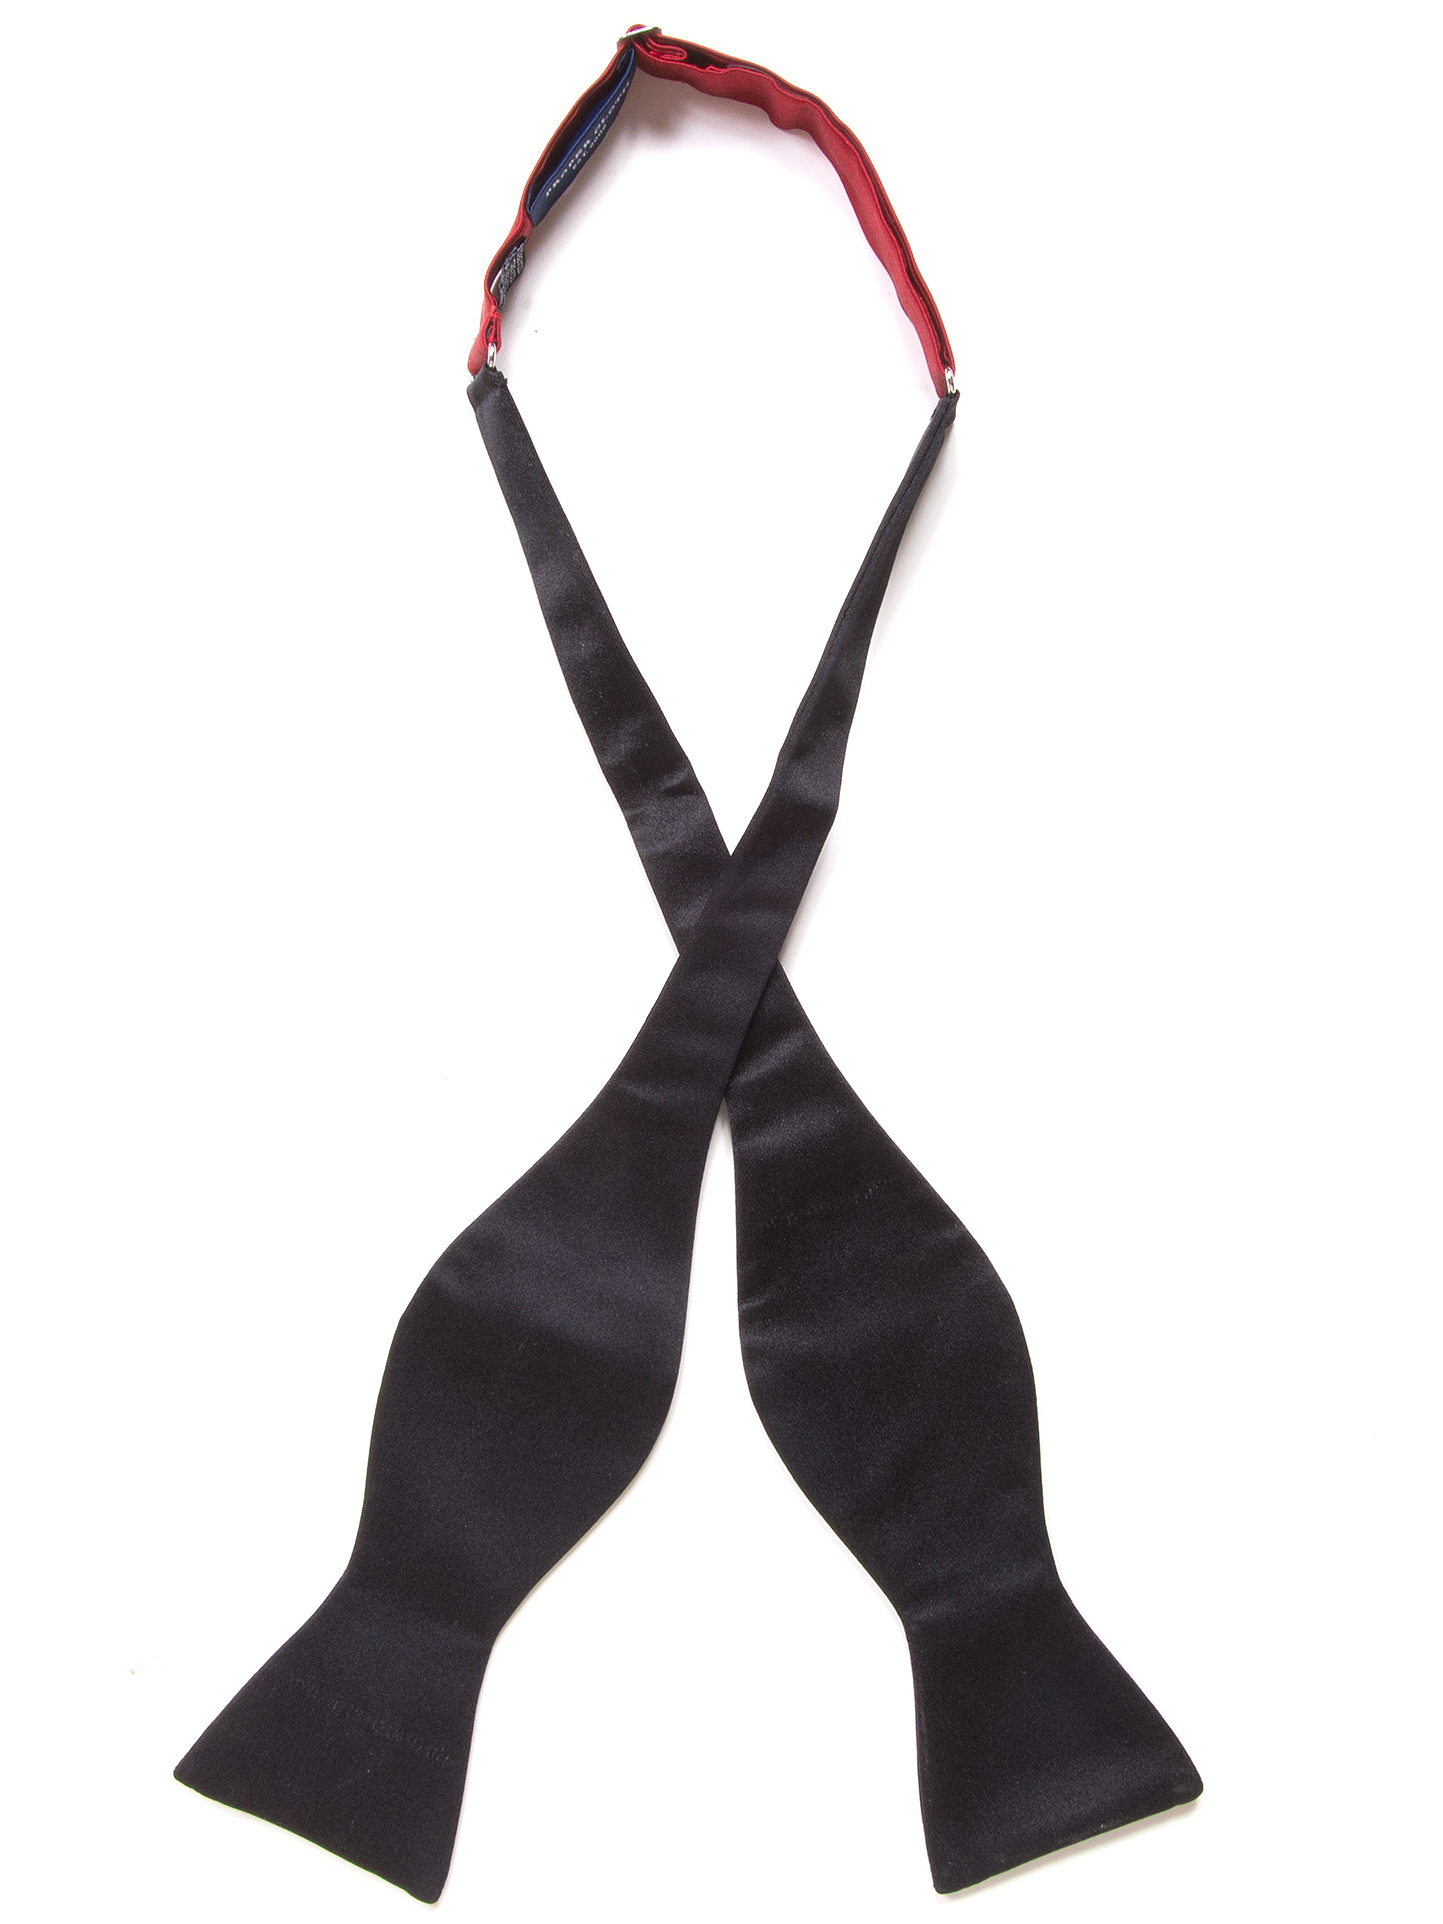 Black Satin Bow Tie by Proper Cloth